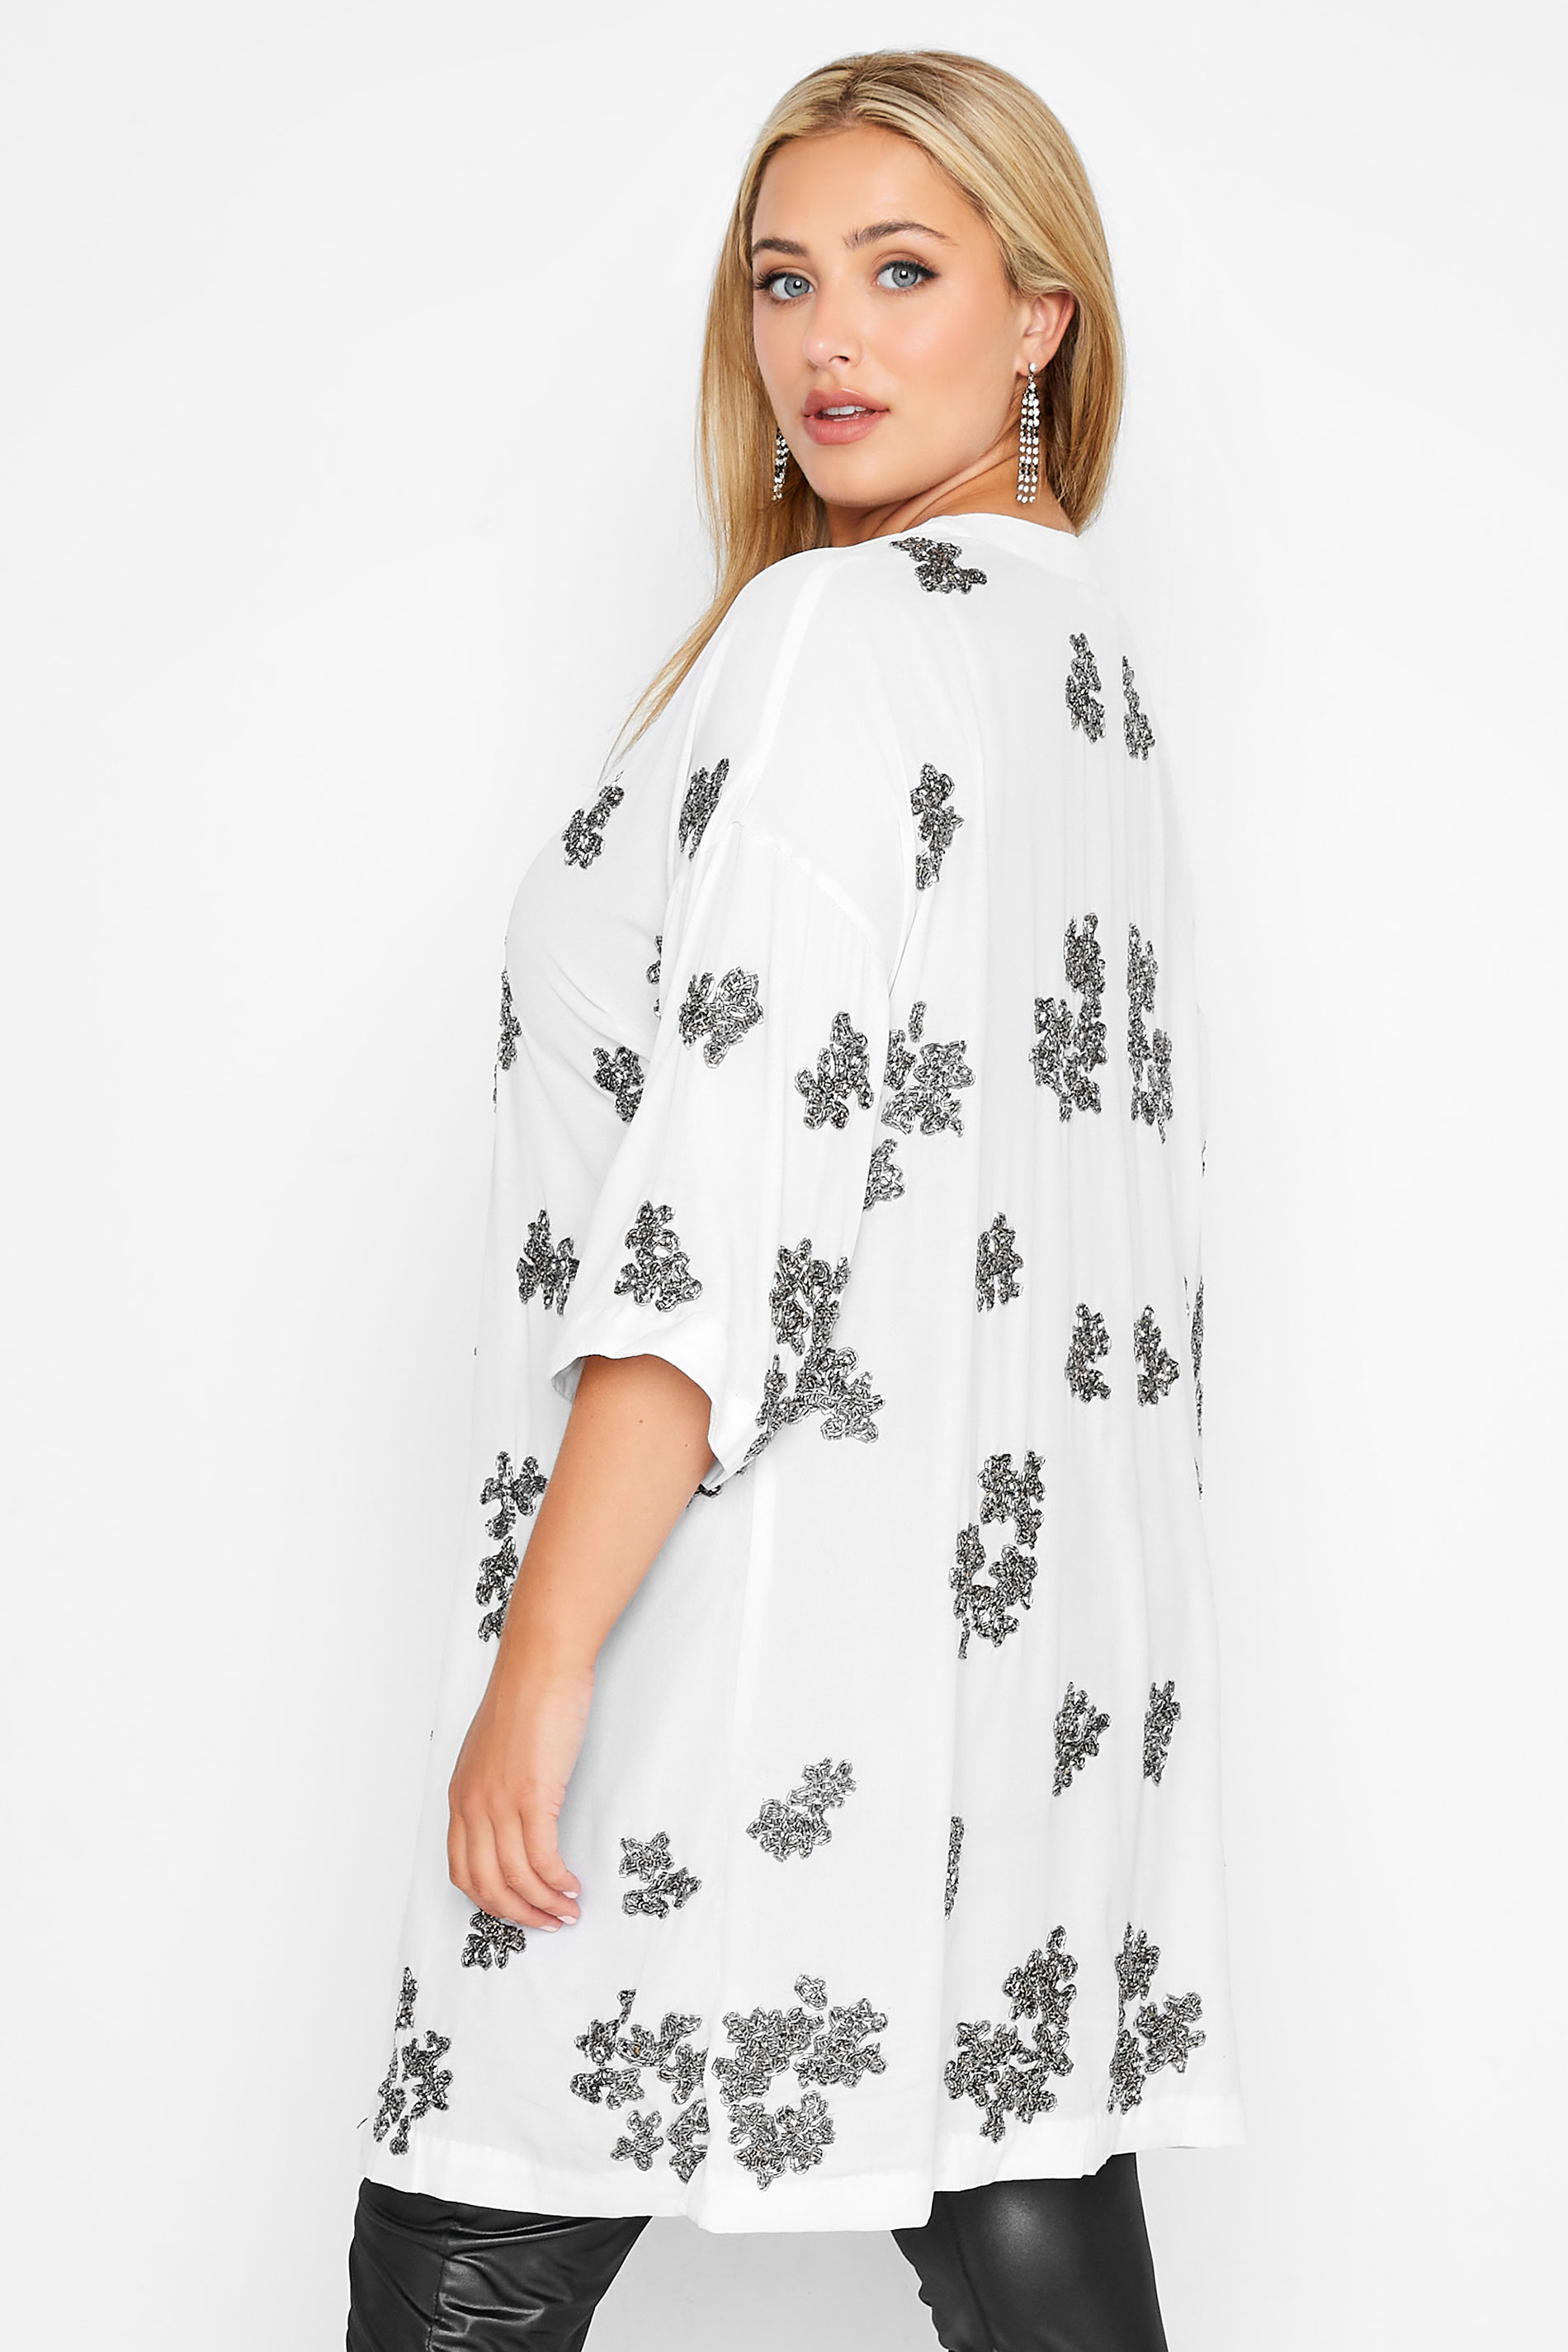 LUXE Plus Size White Hand Embellished Kimono | Yours Clothing 1